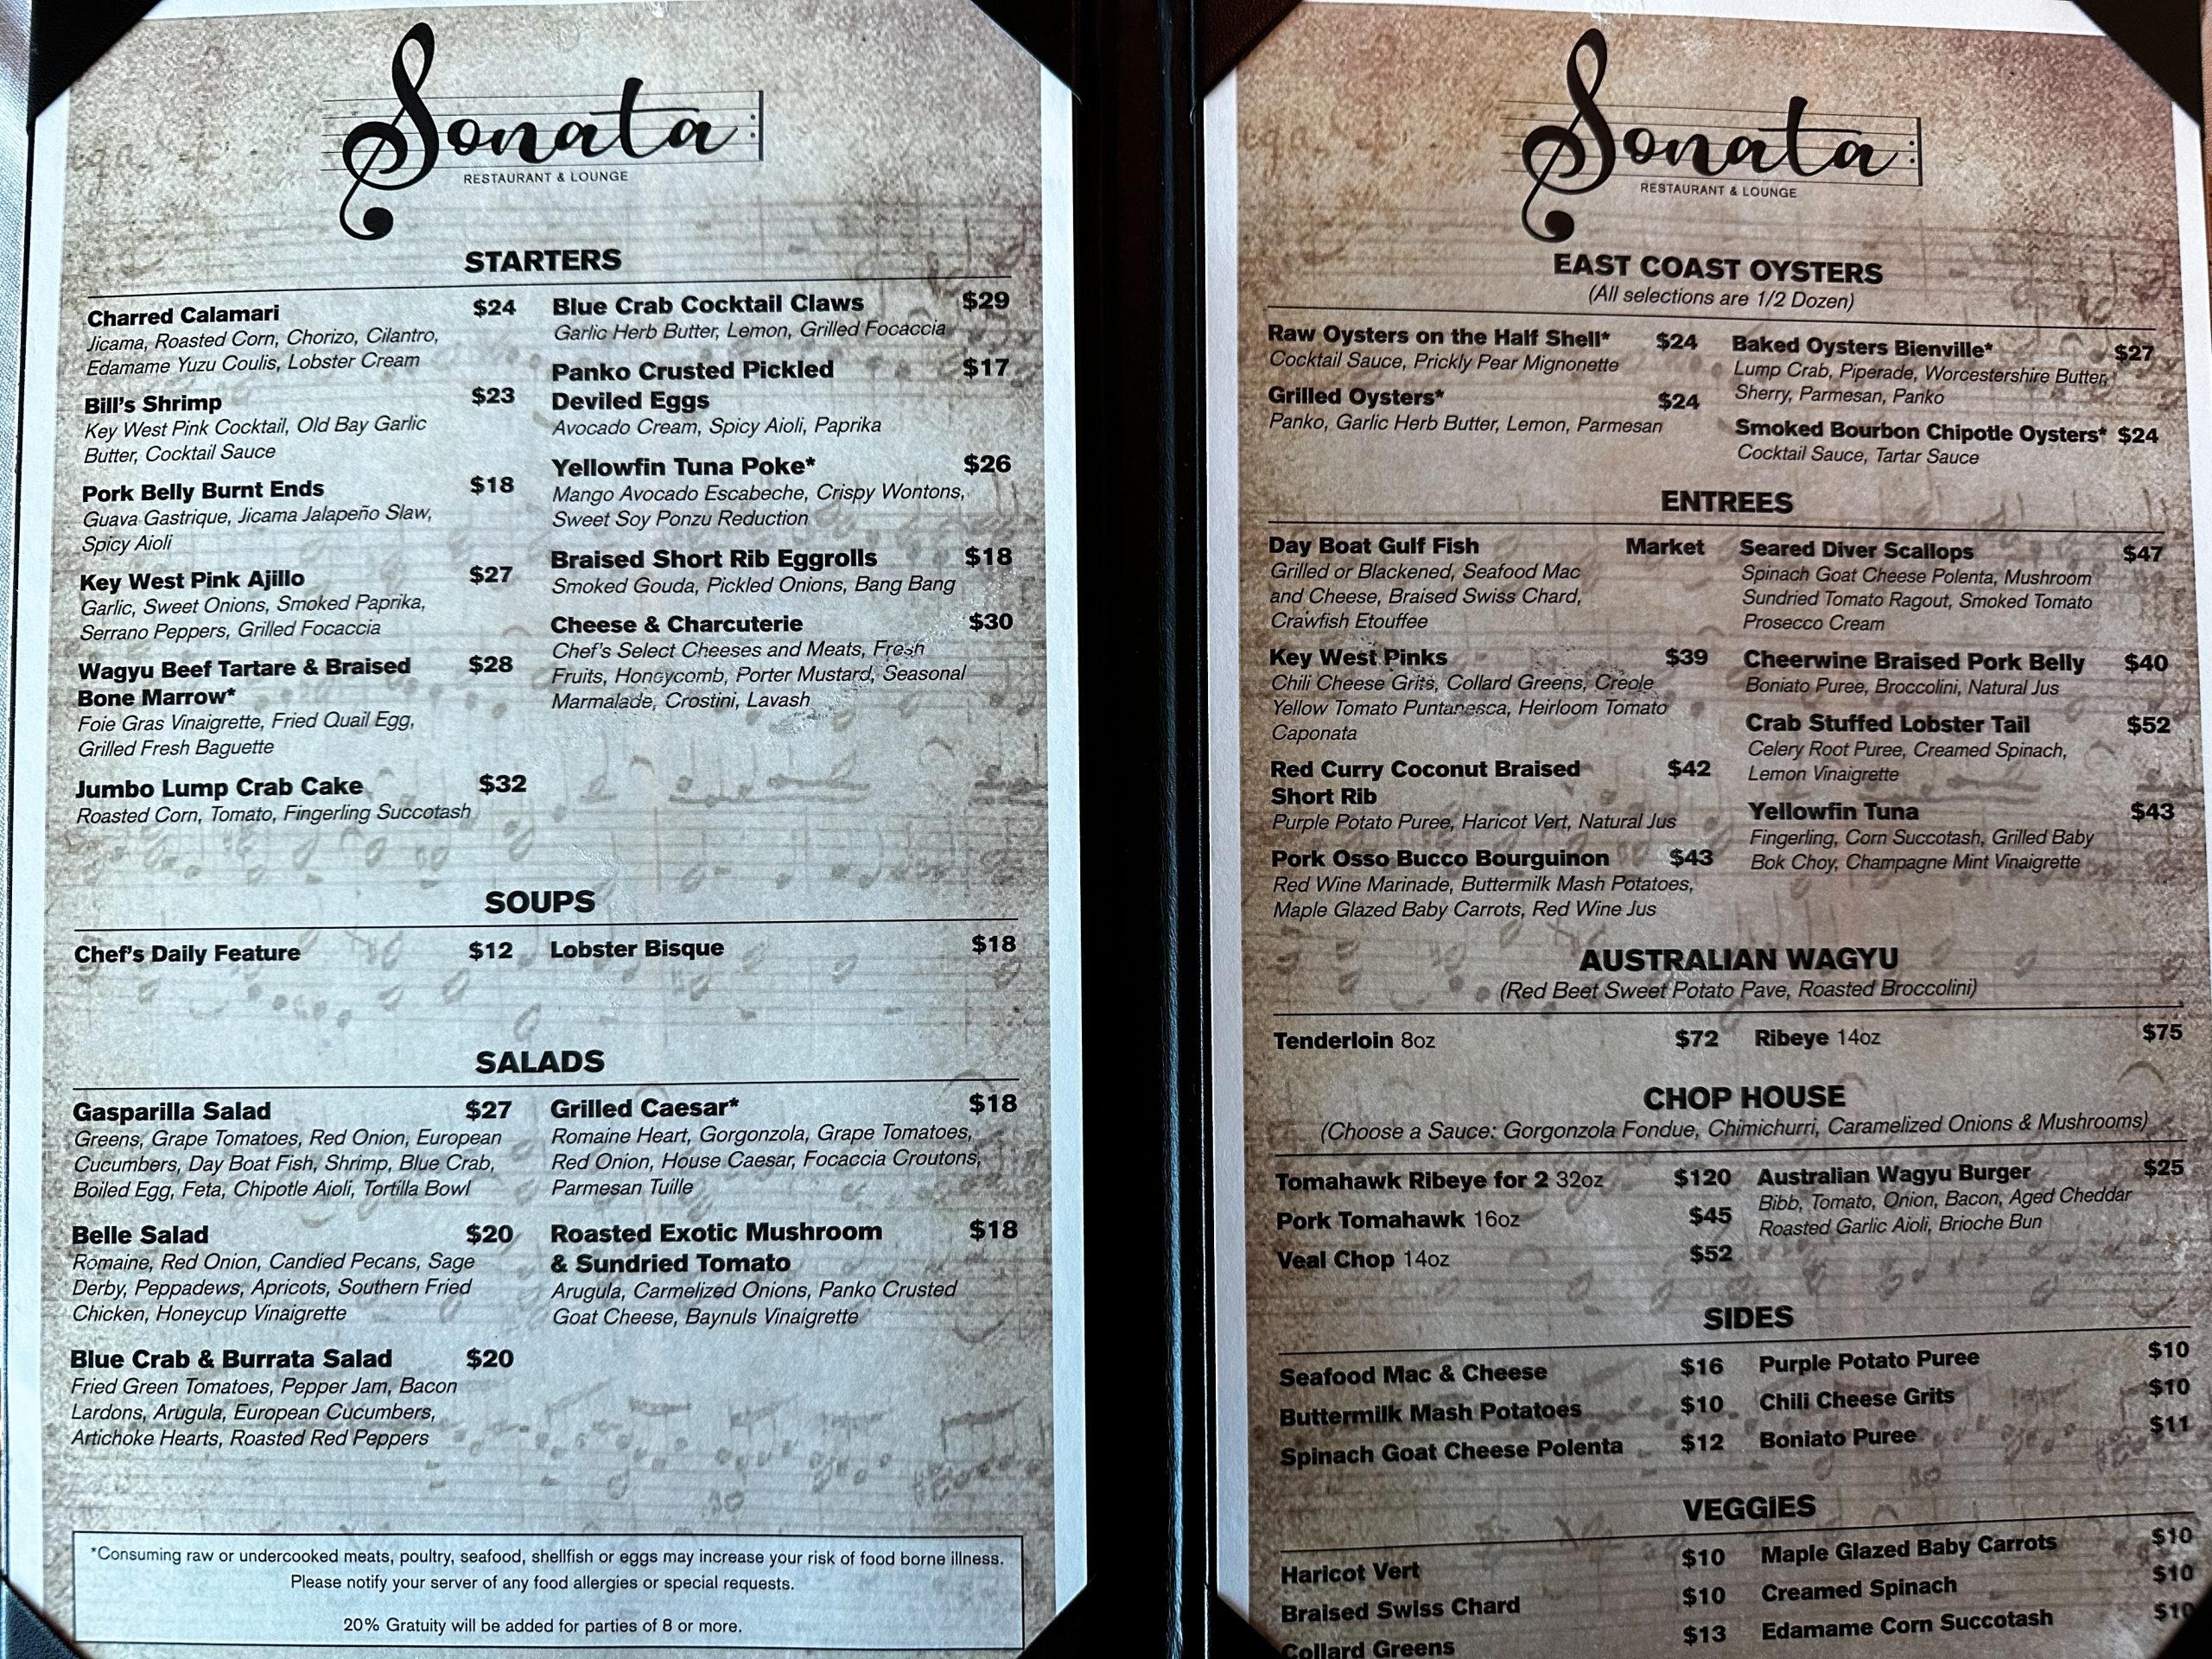 Sonata - The menu